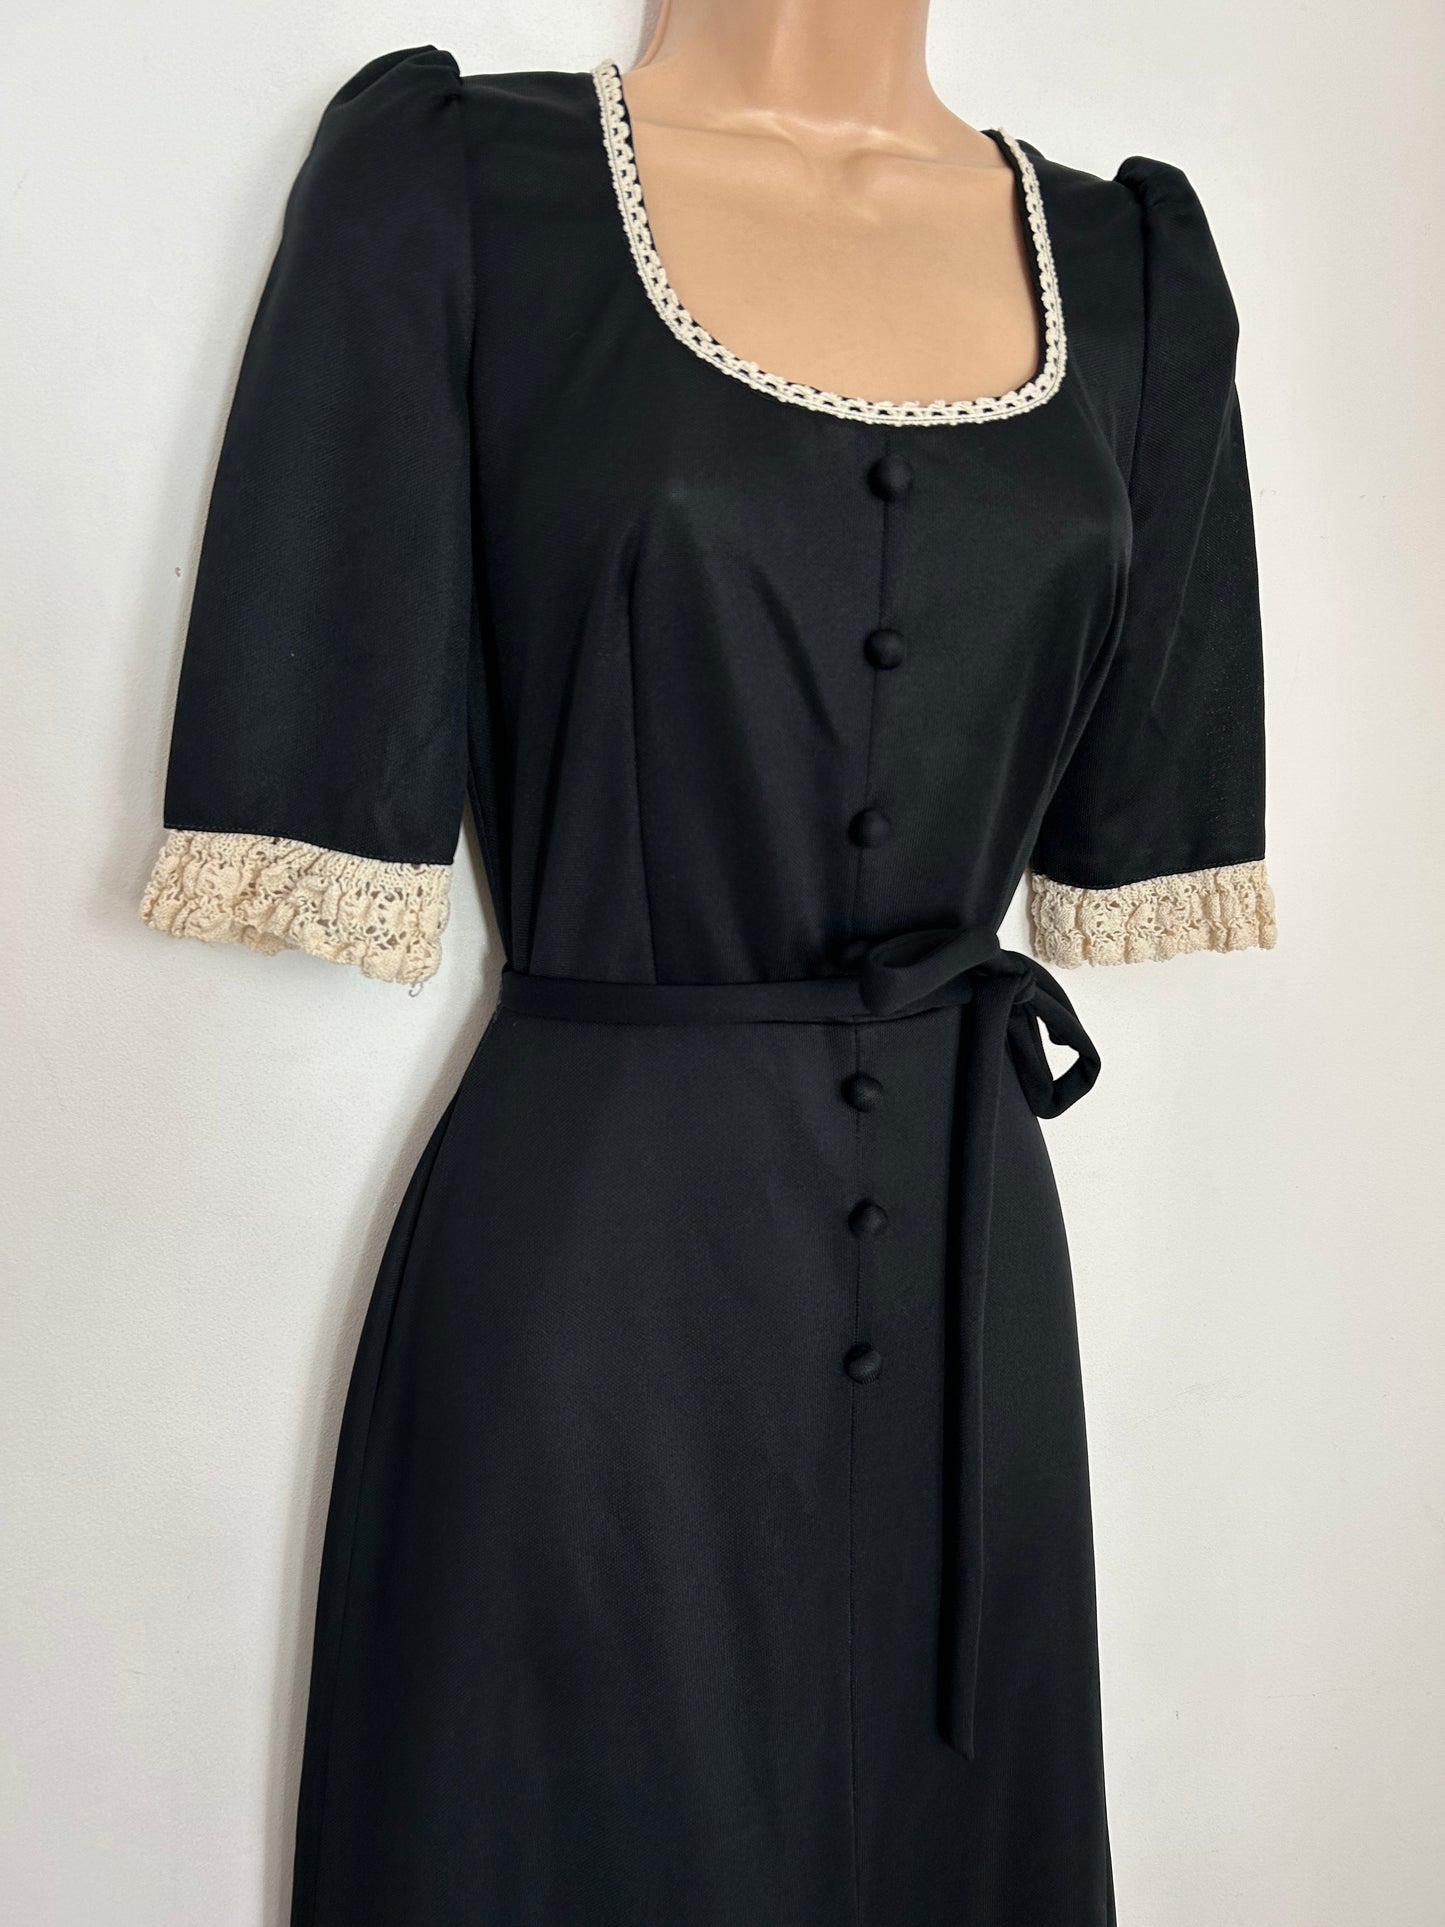 Vintage 1970s UK Size 8-10 Black & Cream Lace Trim Short Sleeve Prairie Boho Maxi Dress